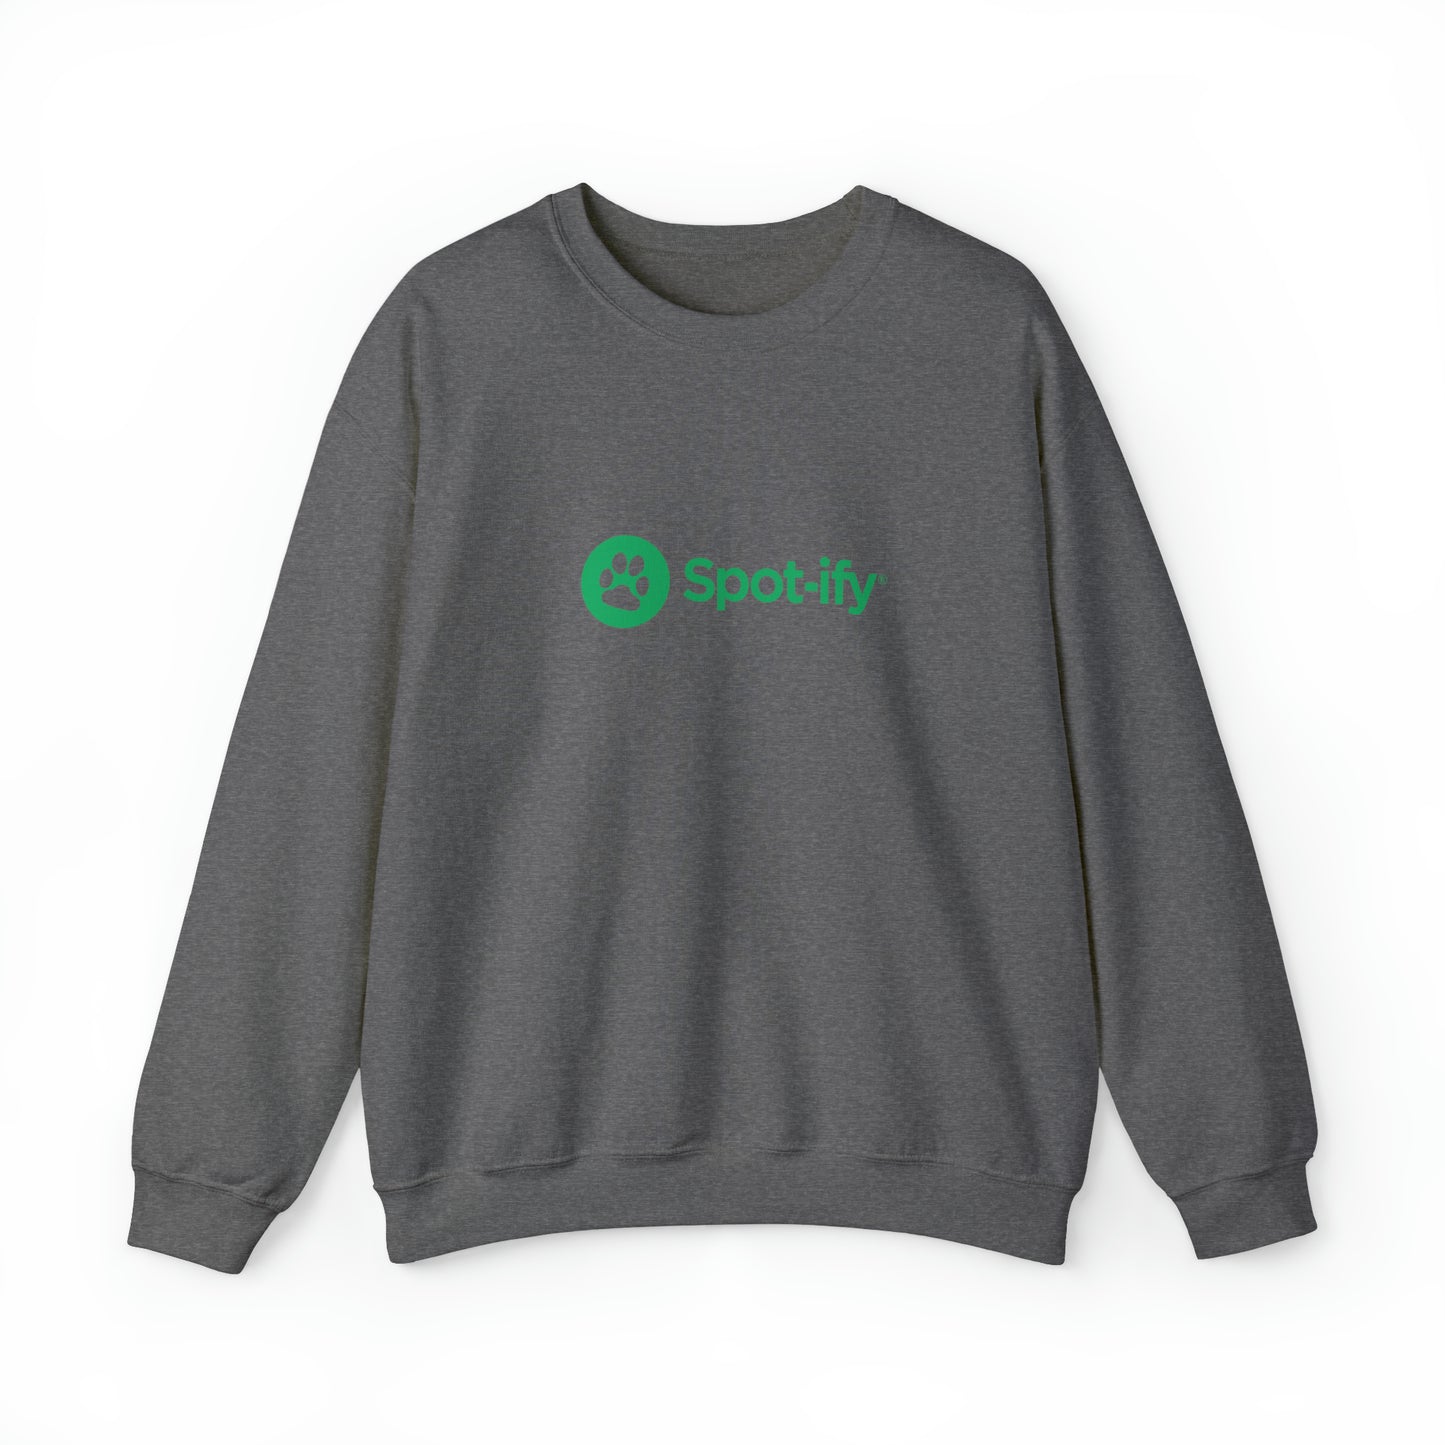 Custom Parody Crewneck Sweatshirt, Spot-ify Design